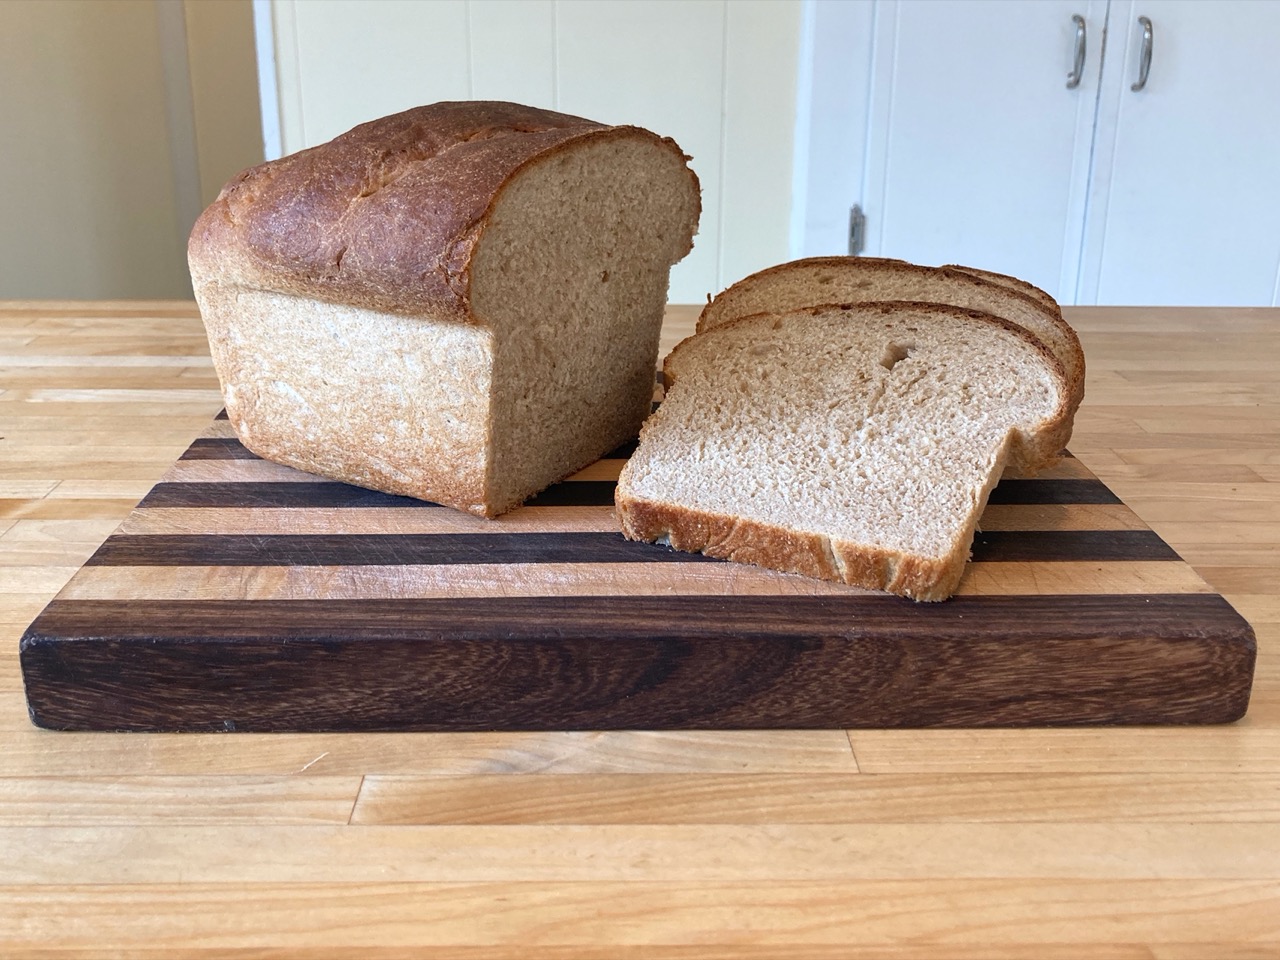 http://www.valeriescookbook.com/images/buttermilk-honey-wheat-bread-served-26.jpeg